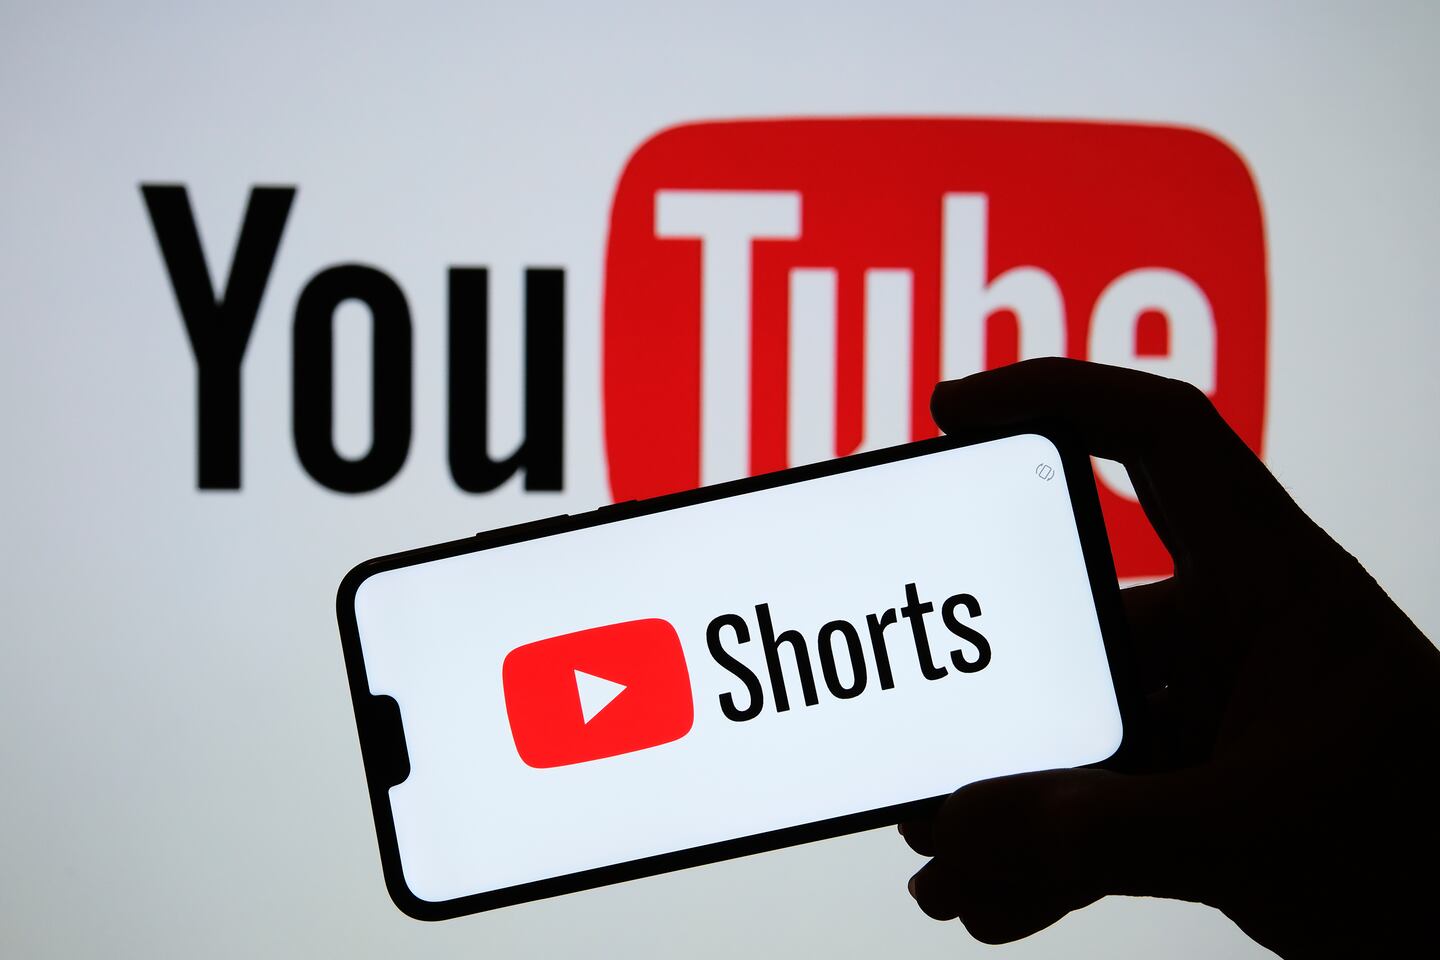 Youtube Shorts app. Shutterstock.